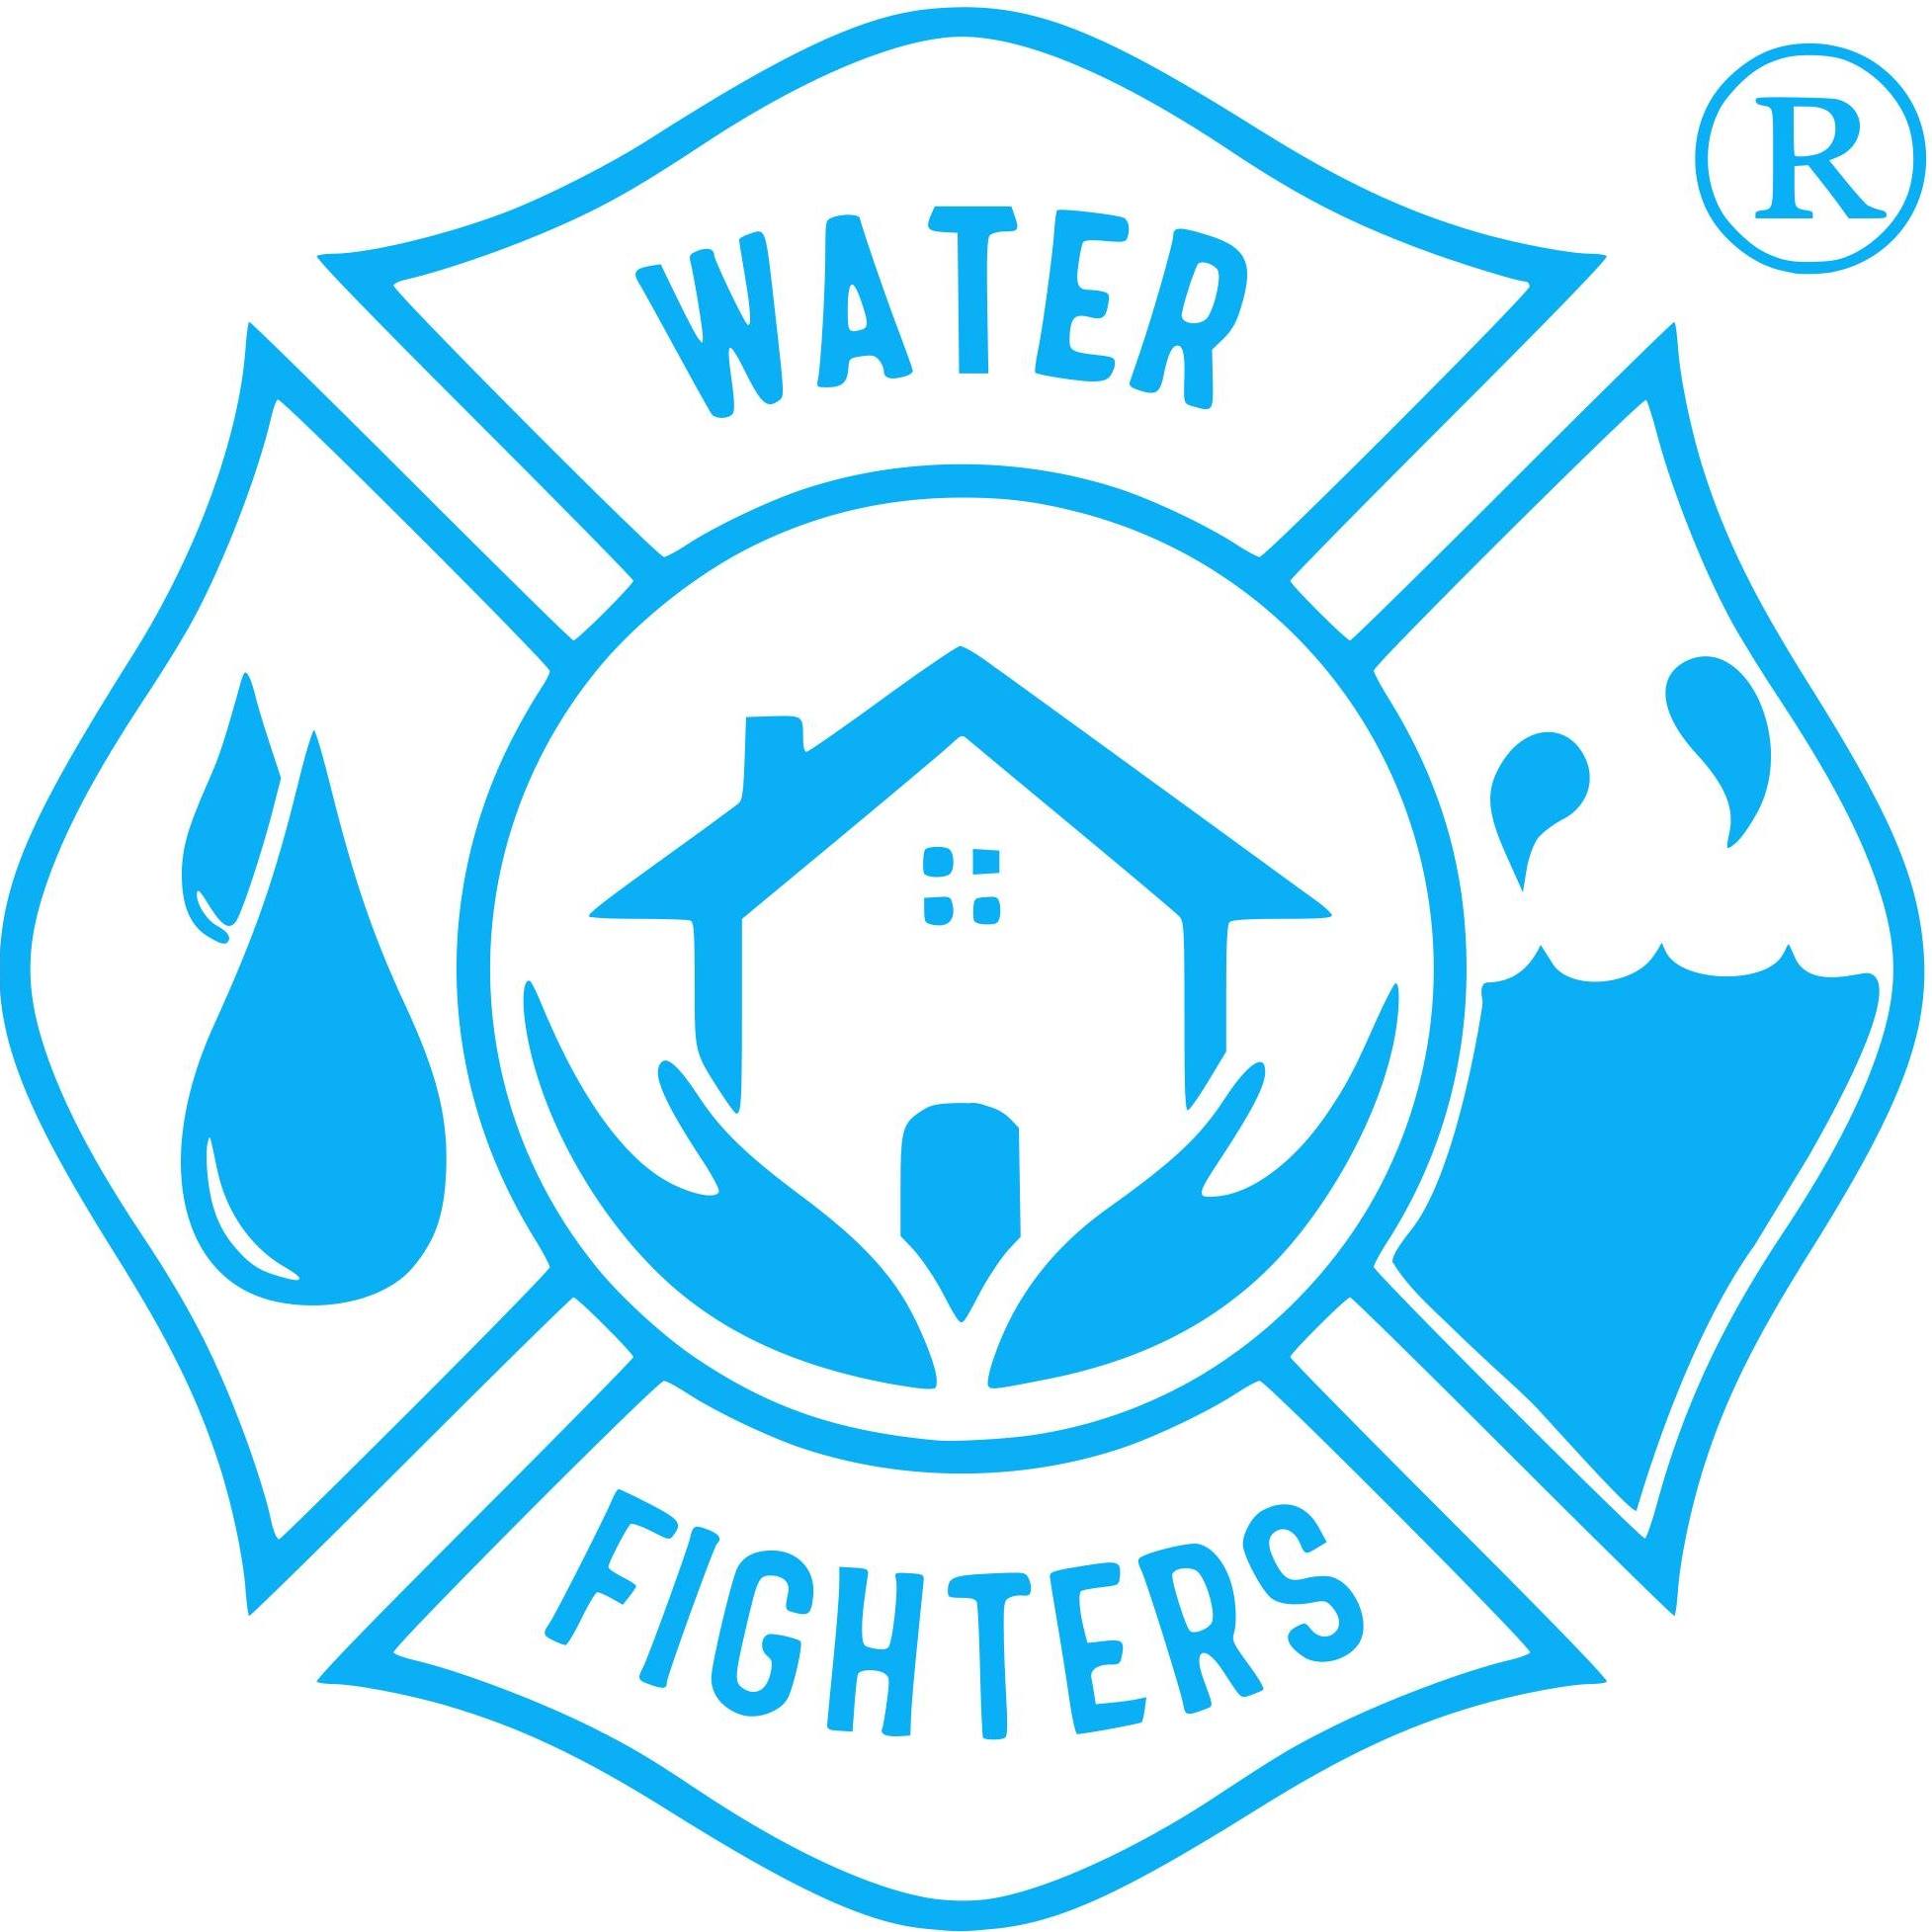 Water Fighters Restoration